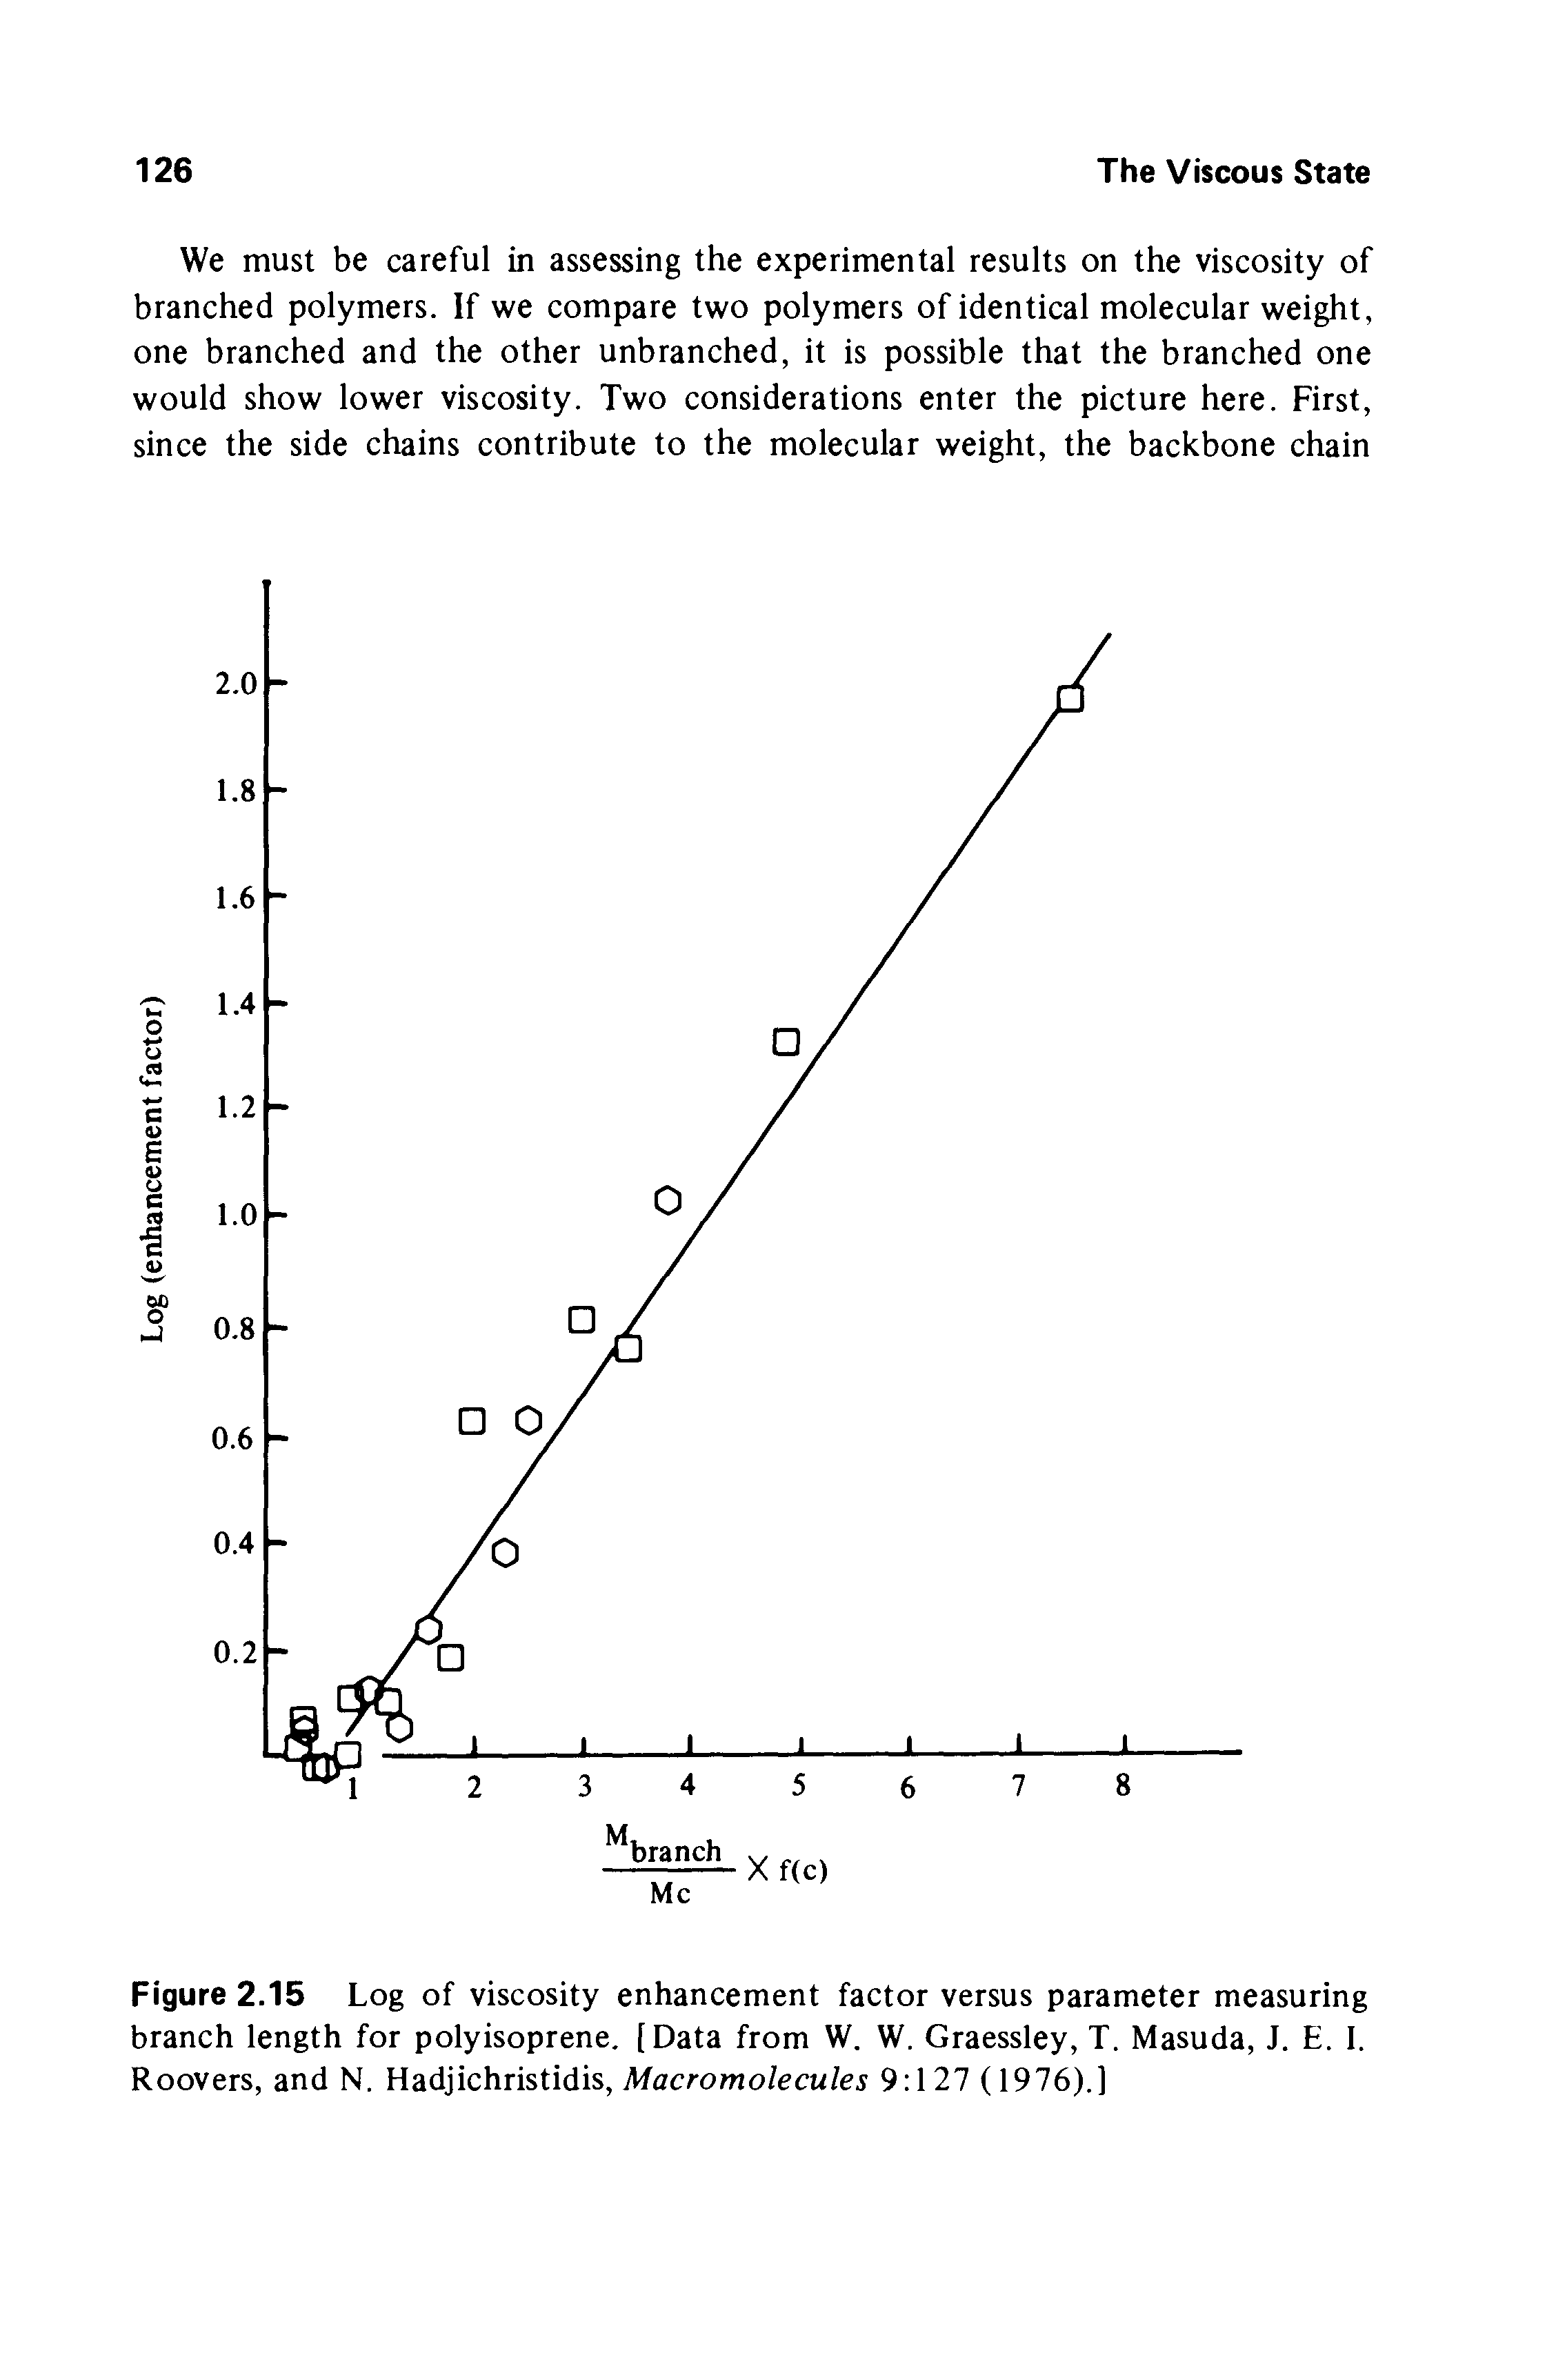 Figure 2.15 Log of viscosity enhancement factor versus parameter measuring branch length for polyisoprene, [Data from W. W. Graessley, T. Masuda, J. E. I. Roovers, and N. Hadjichristidis, Afacromo/ecu/ej 9 127 (1976).]...